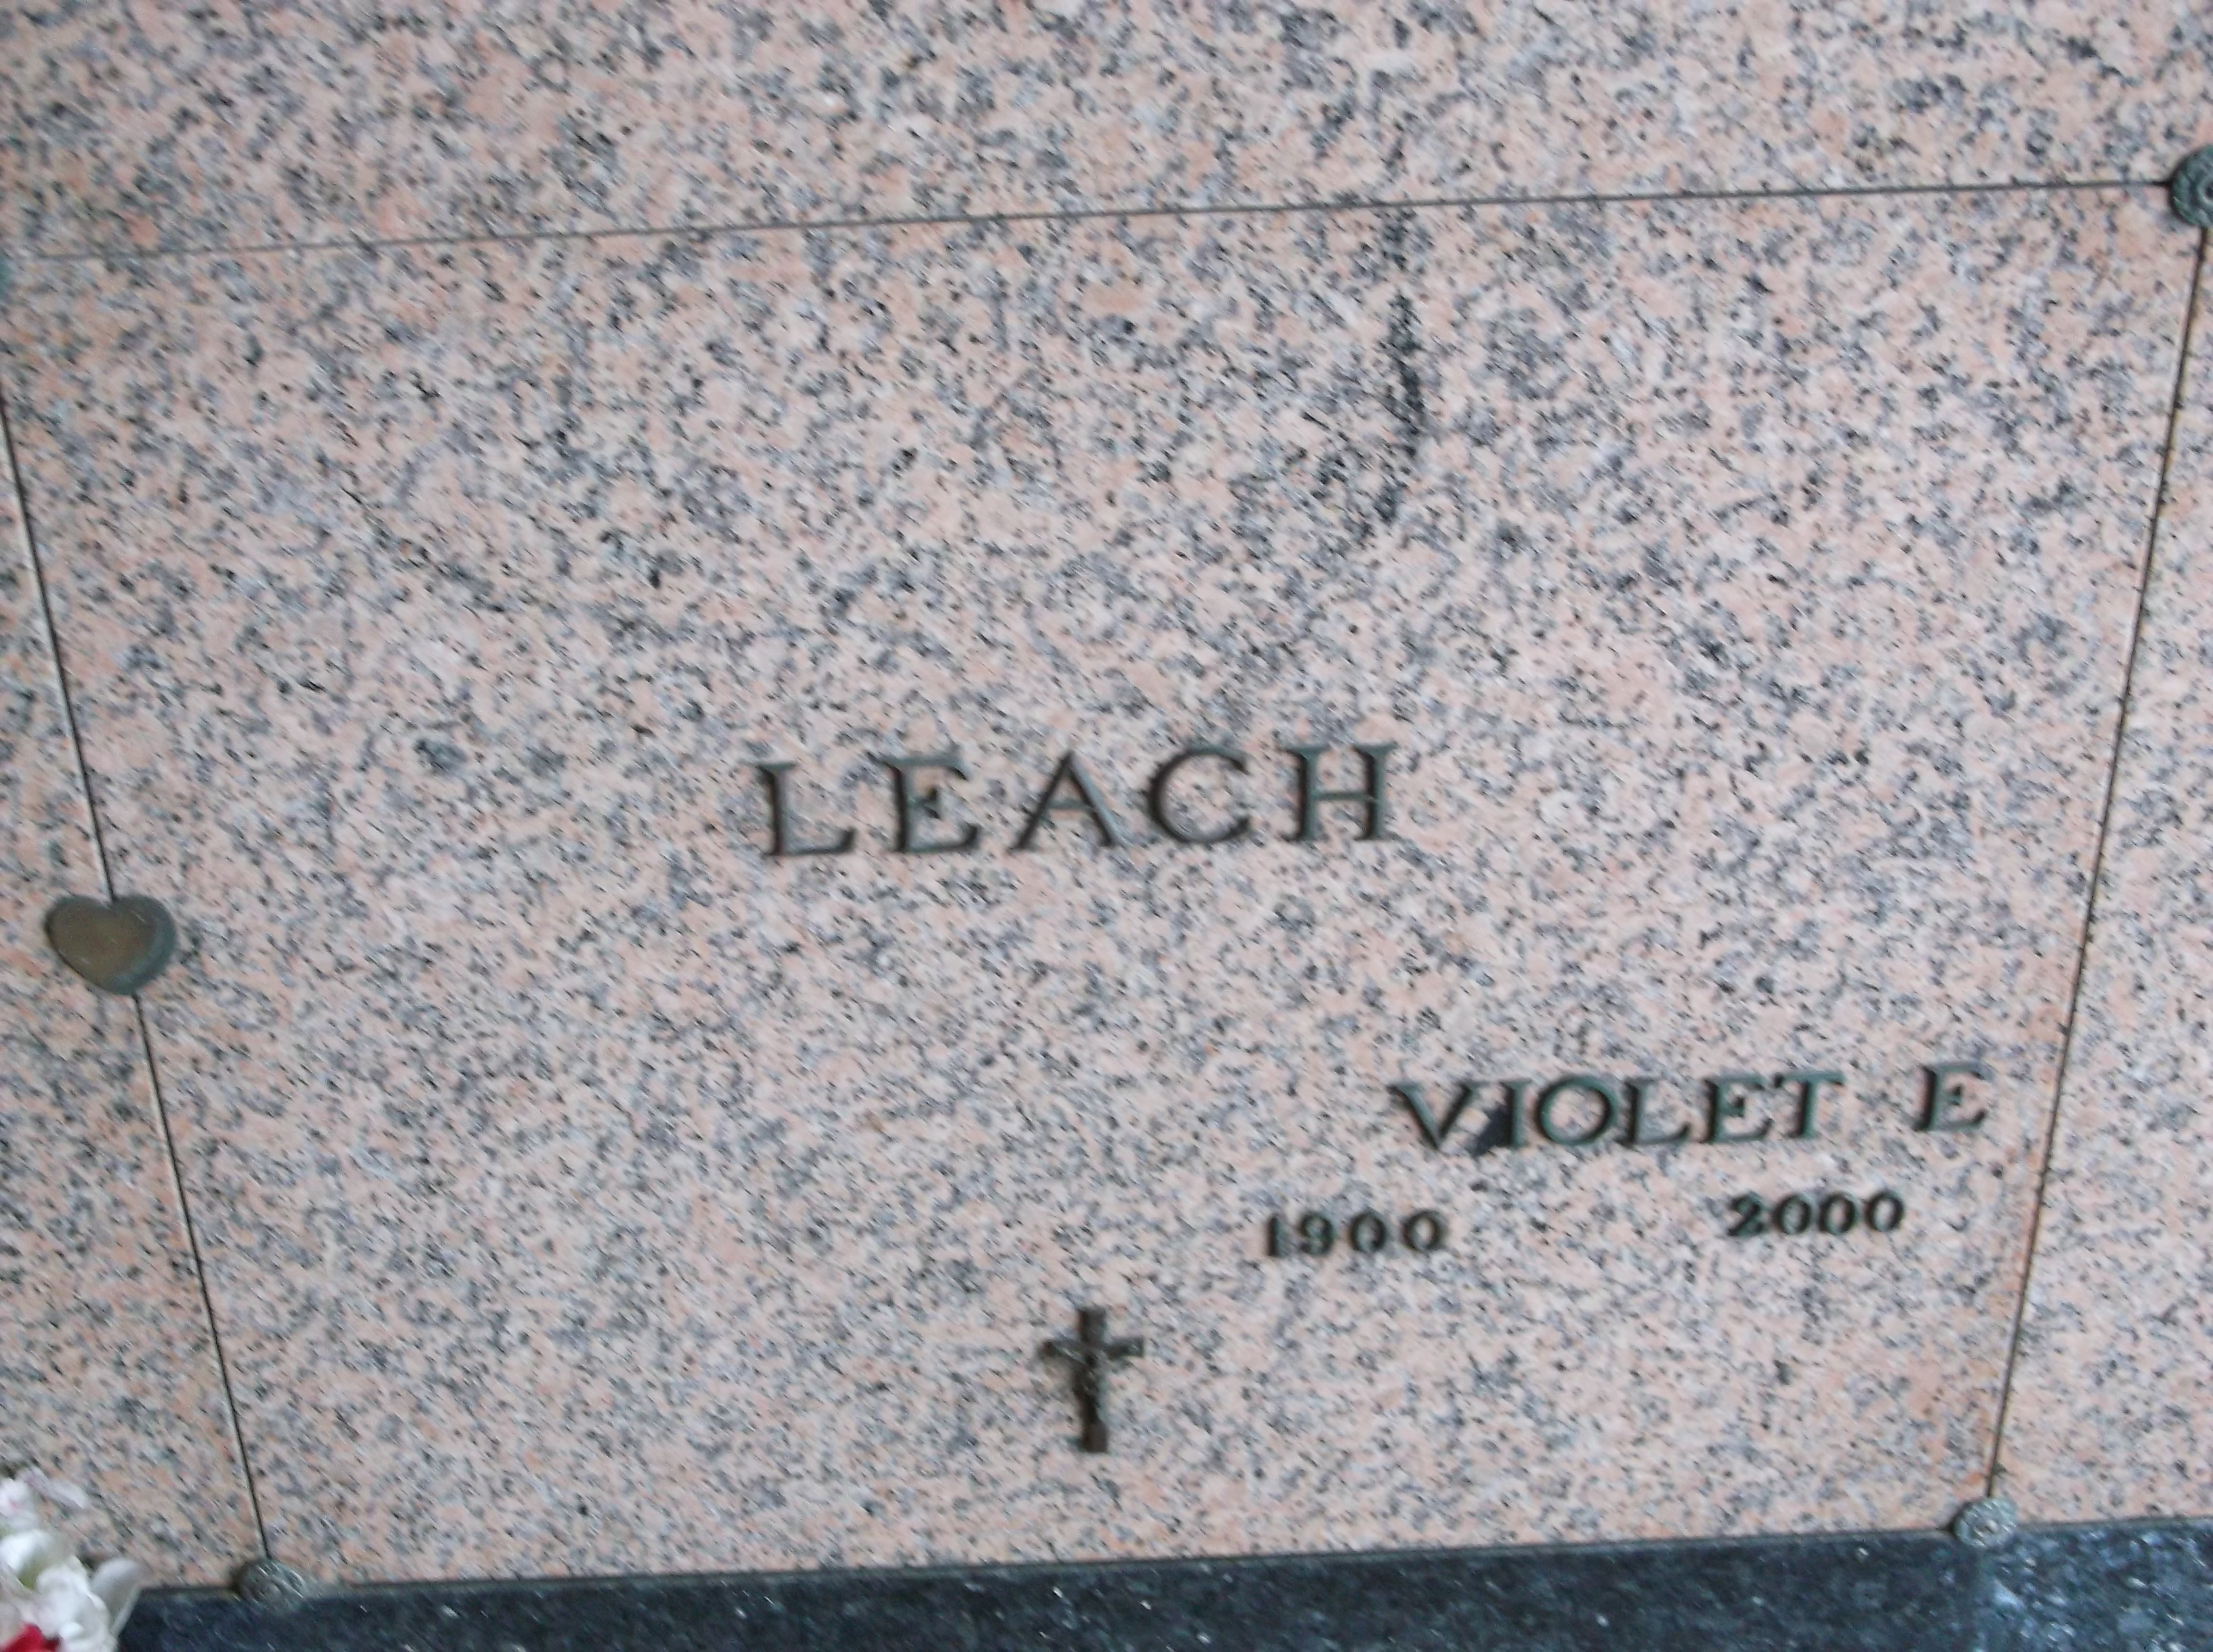 Violet E Leach